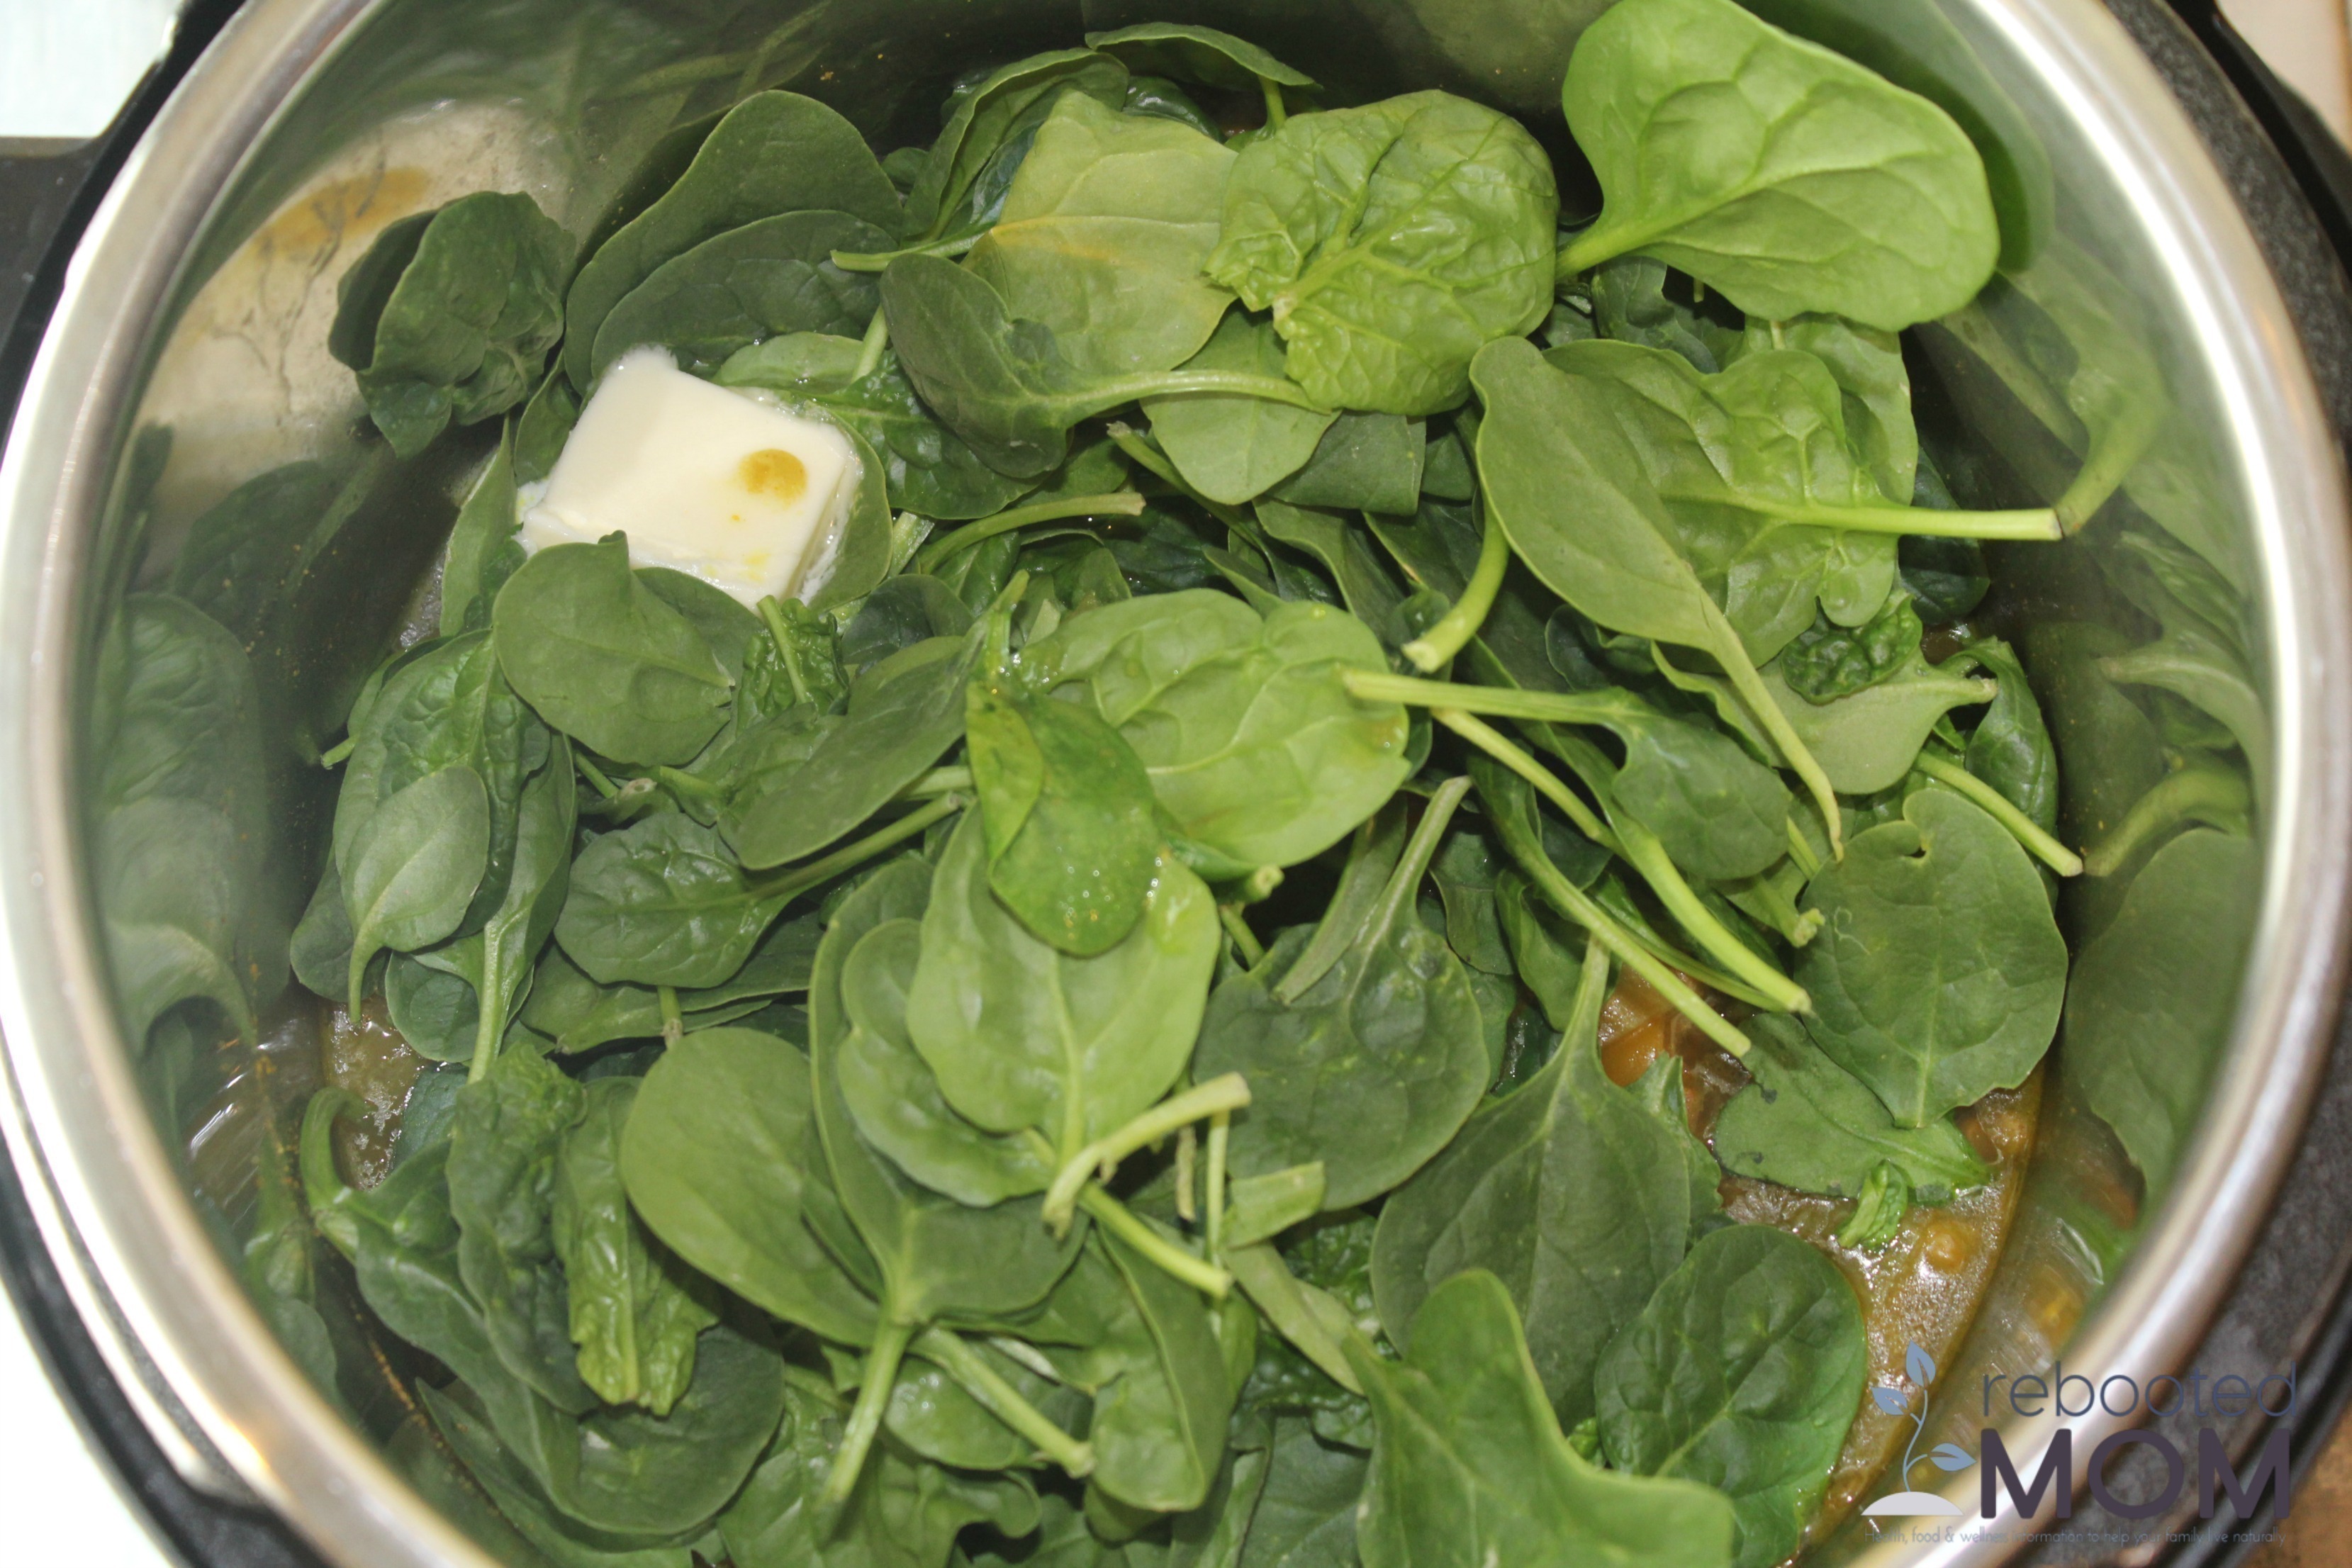 Everyday Lentil & Spinach Dal {Instant Pot}